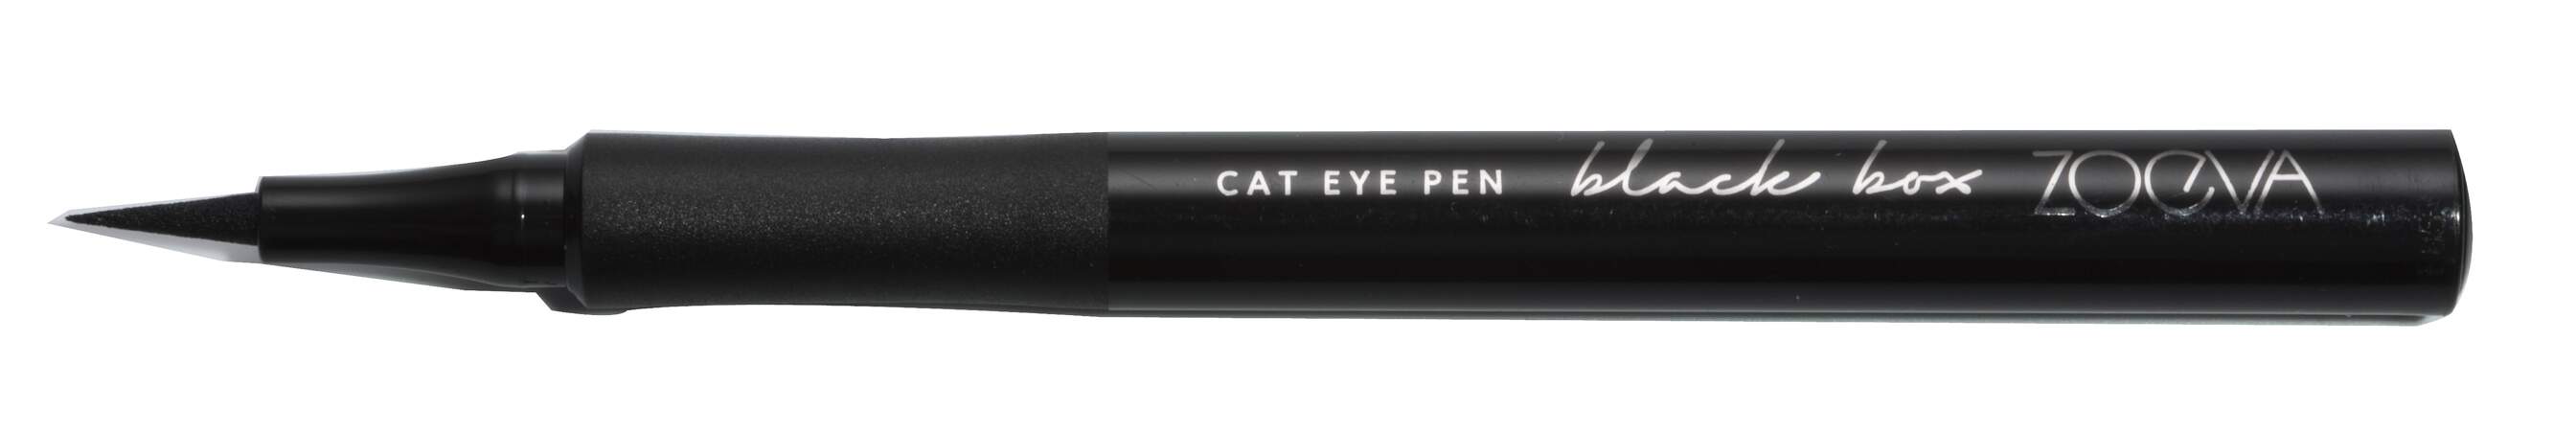 Cat Eye Pen, Black Box, Zoova - 24€n thebeautist.com 